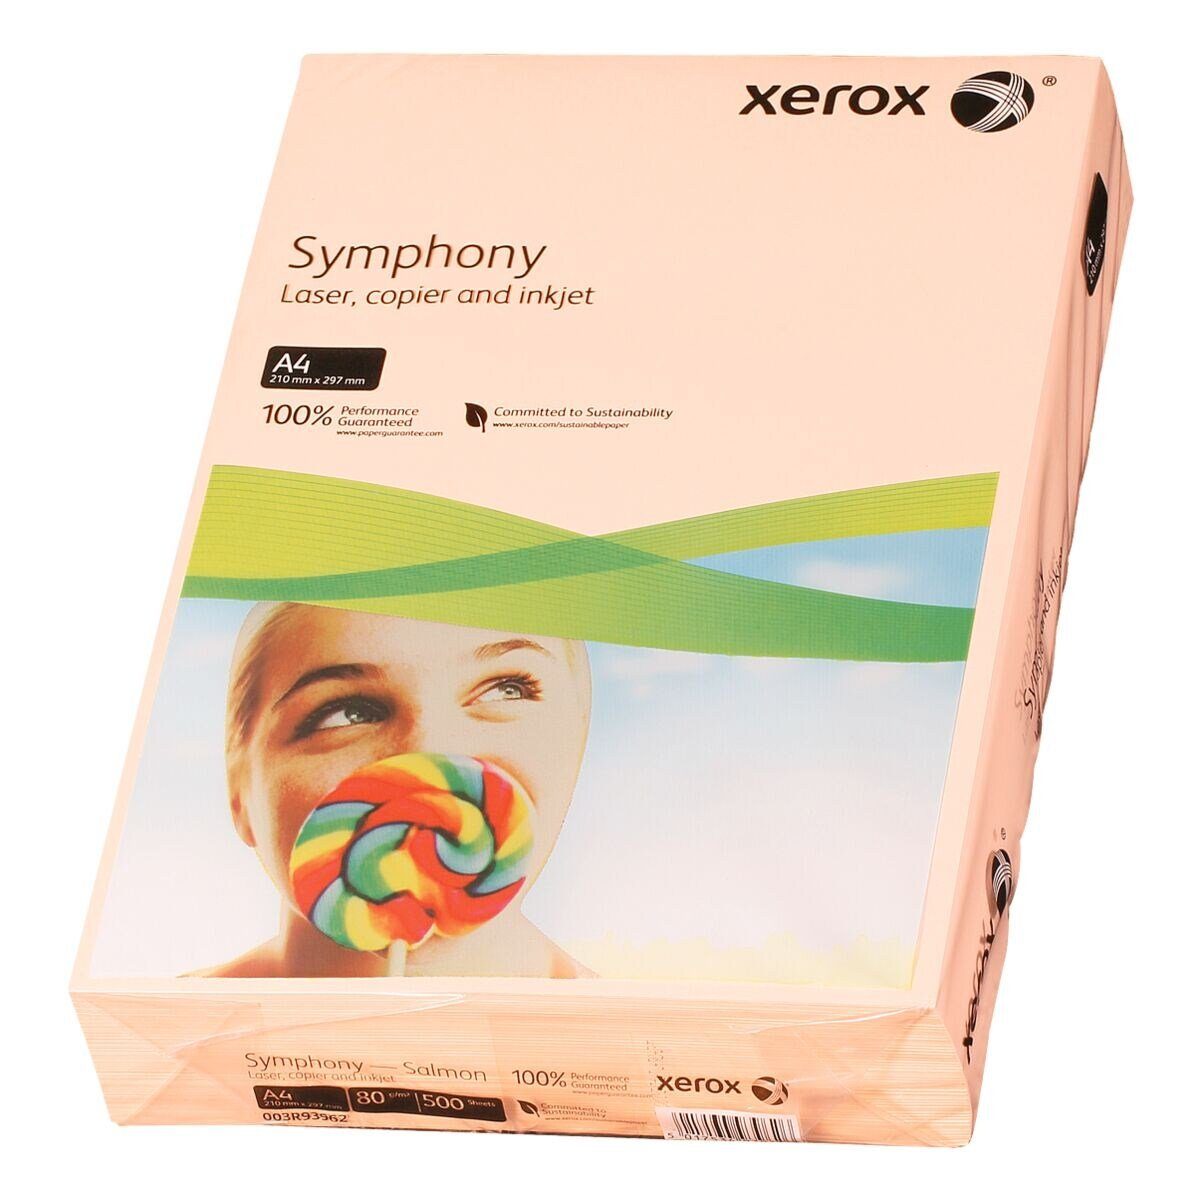 Xerox Drucker- und Format DIN Kopierpapier Symphony, lachs Blatt 80 Pastellfarben, 500 A4, g/m²